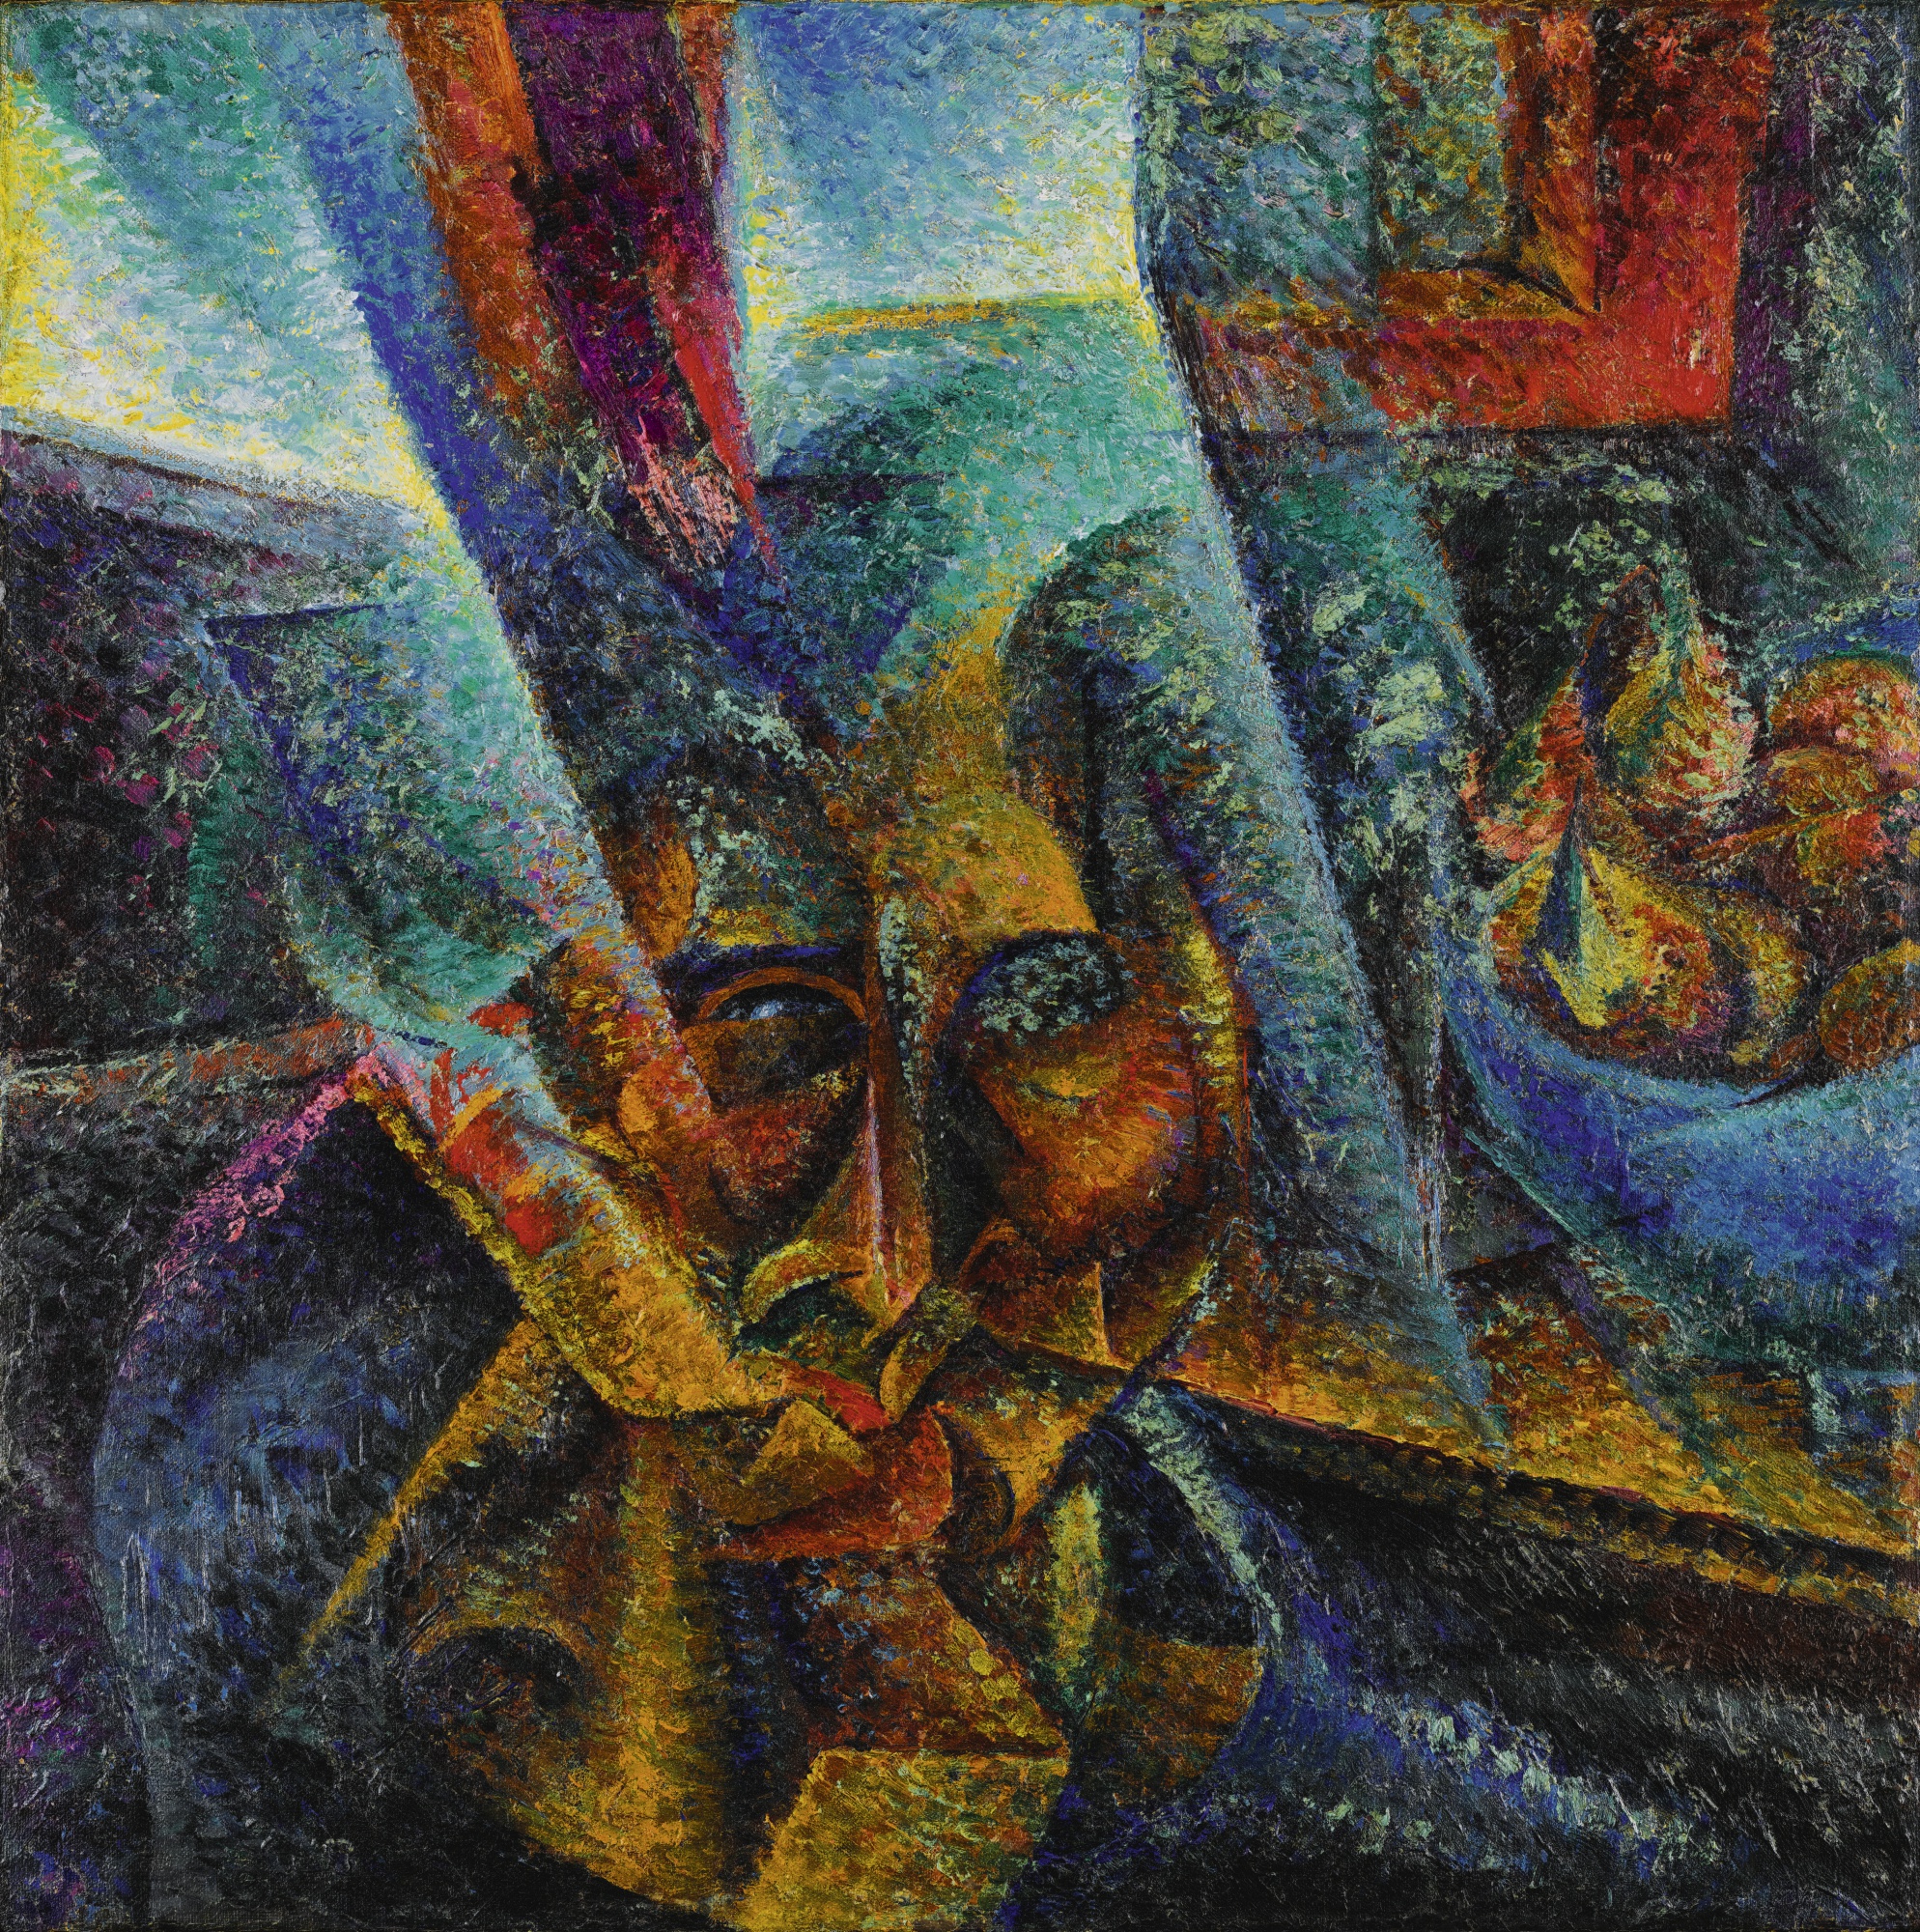 Umberto Boccioni, Testa + luce + ambiente, oil on canvas, 1912 (est. £5,500,000-7,500,000)